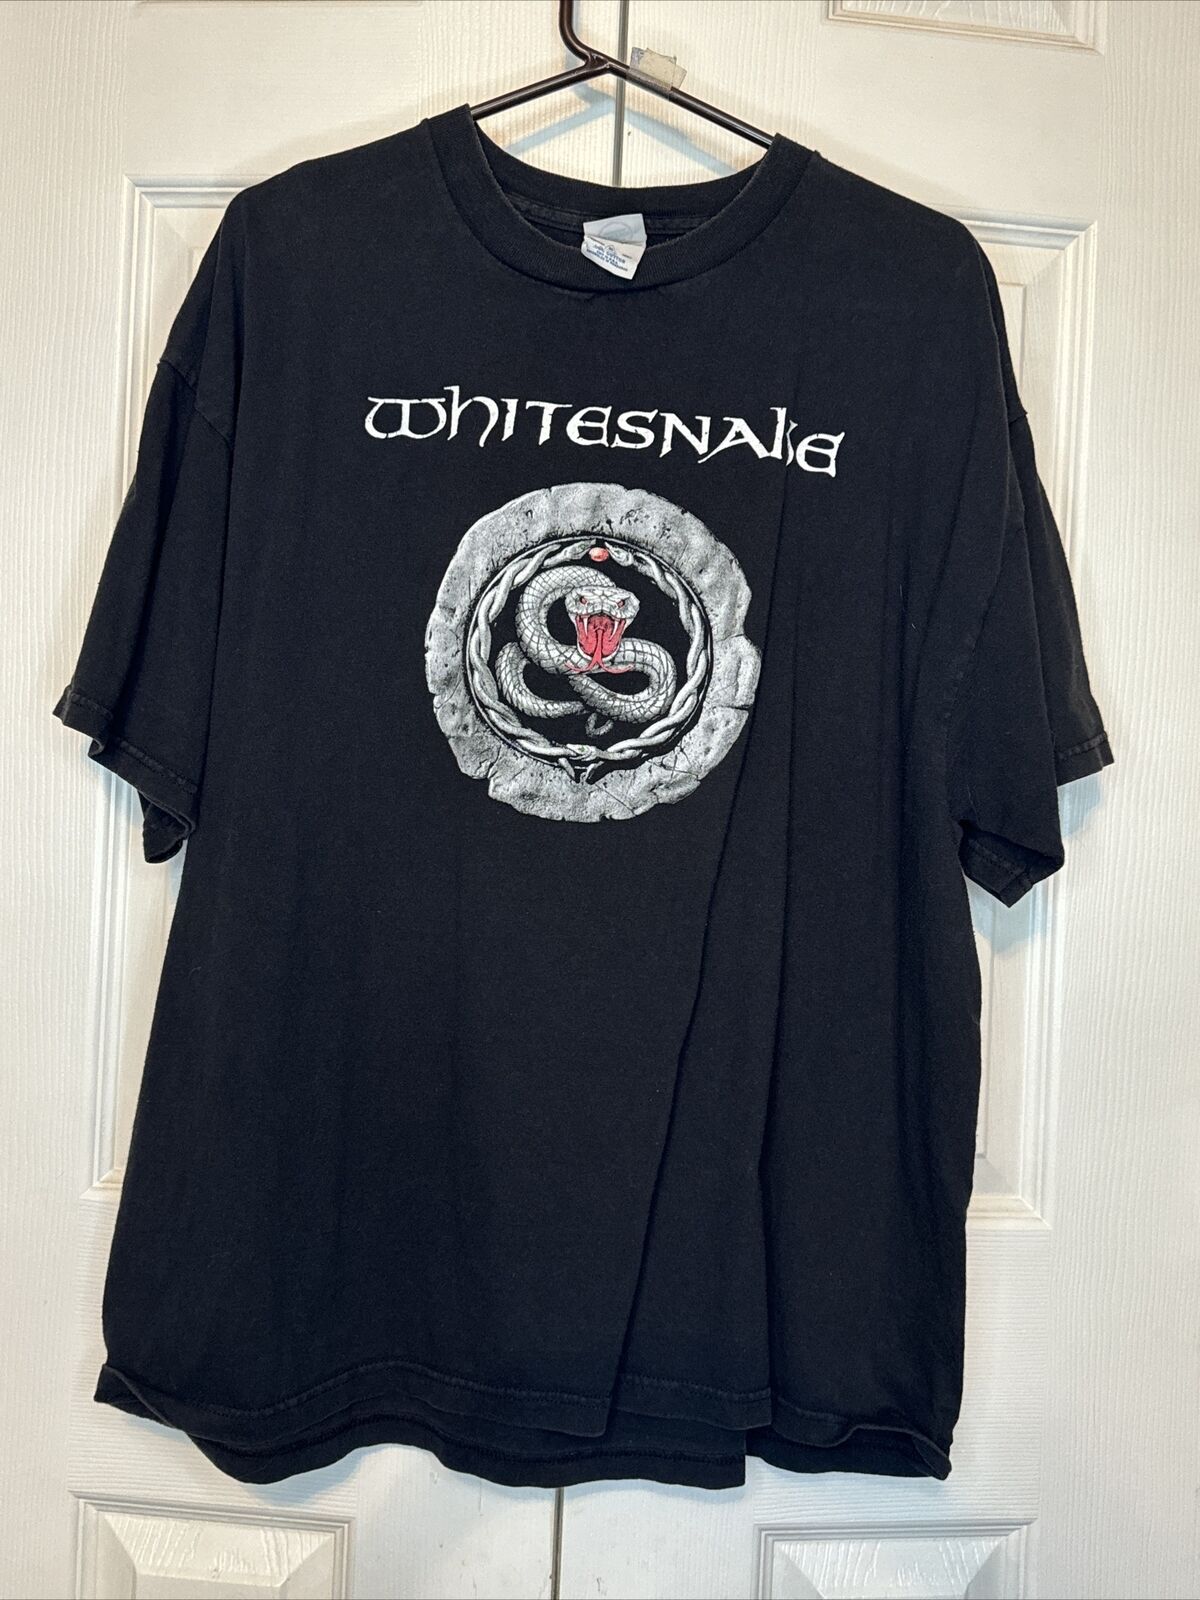 Vintage 2003 Whitesnake Concert Tee Shirt Size Xl 2000s 2003 Rock Band Tour Fade